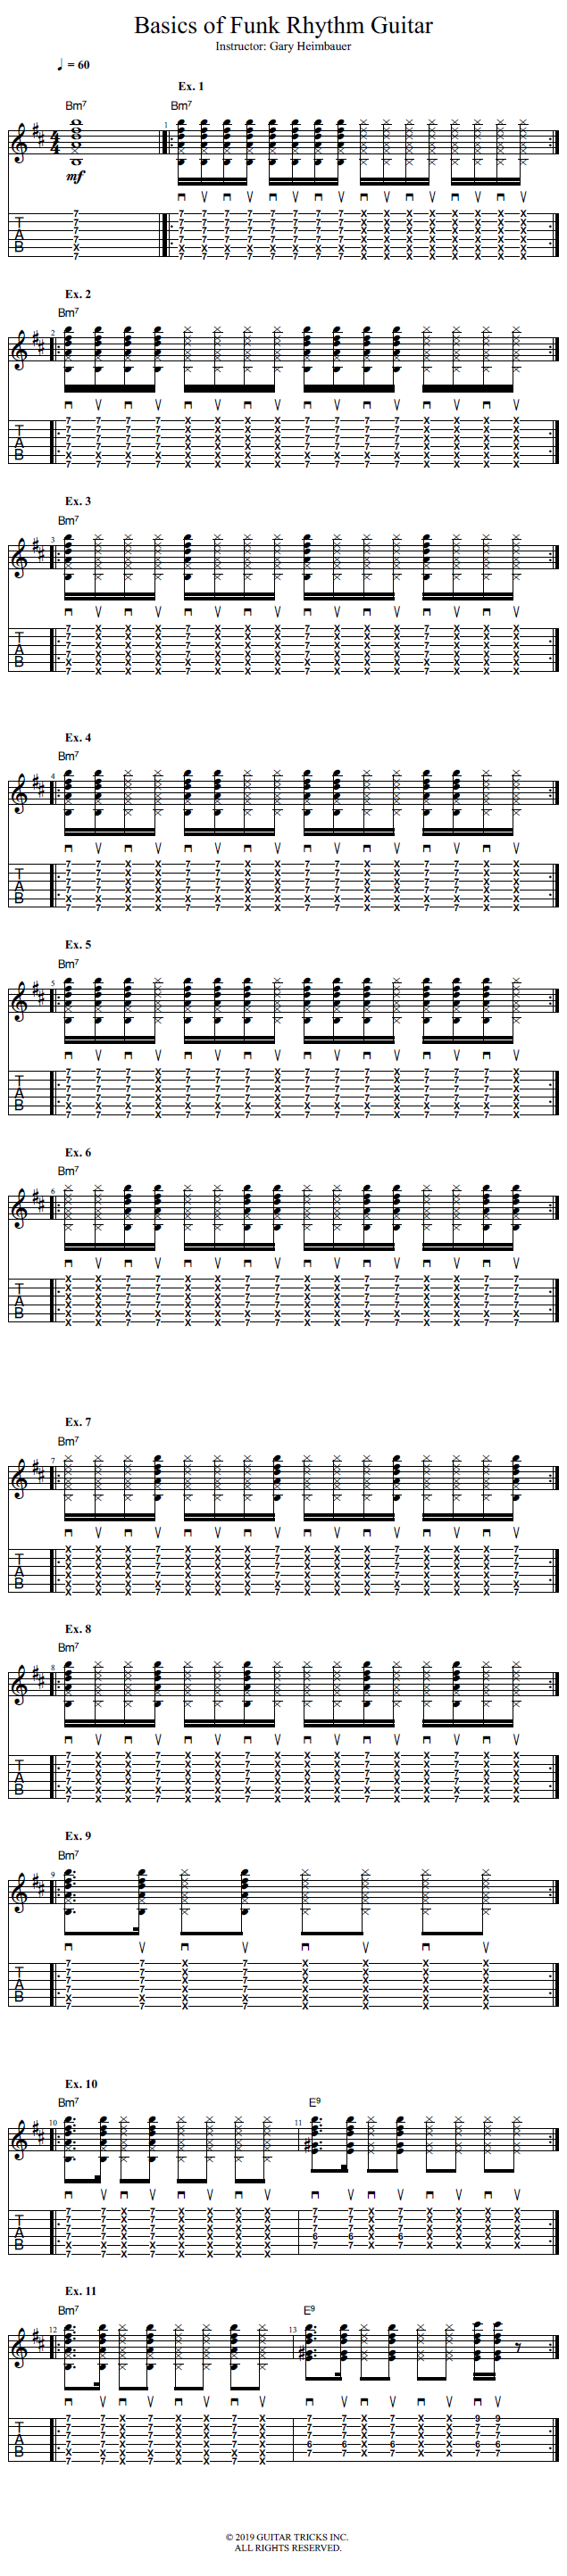 Basics of Funk Rhythm Guitar song notation